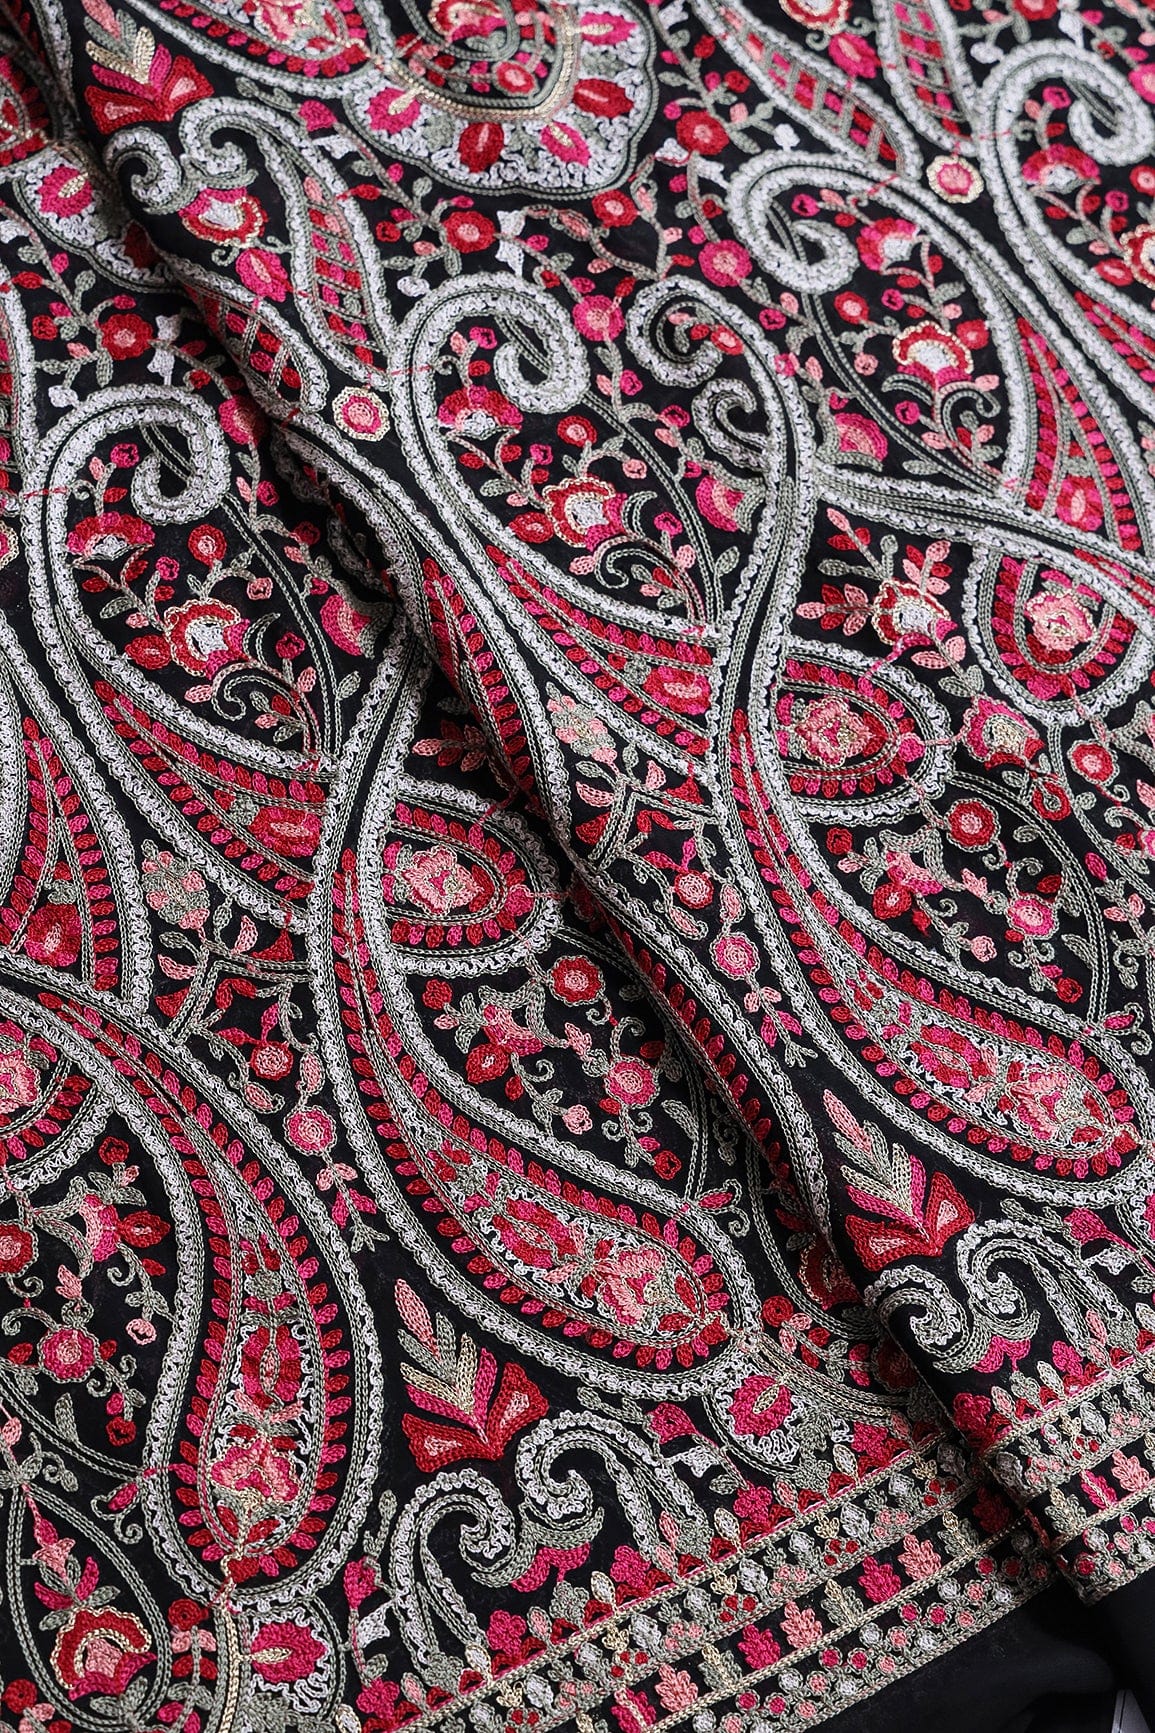 doeraa Embroidery Fabrics Multi Thread With Zari Paisley Embroidery On Black Viscose Georgette Fabric